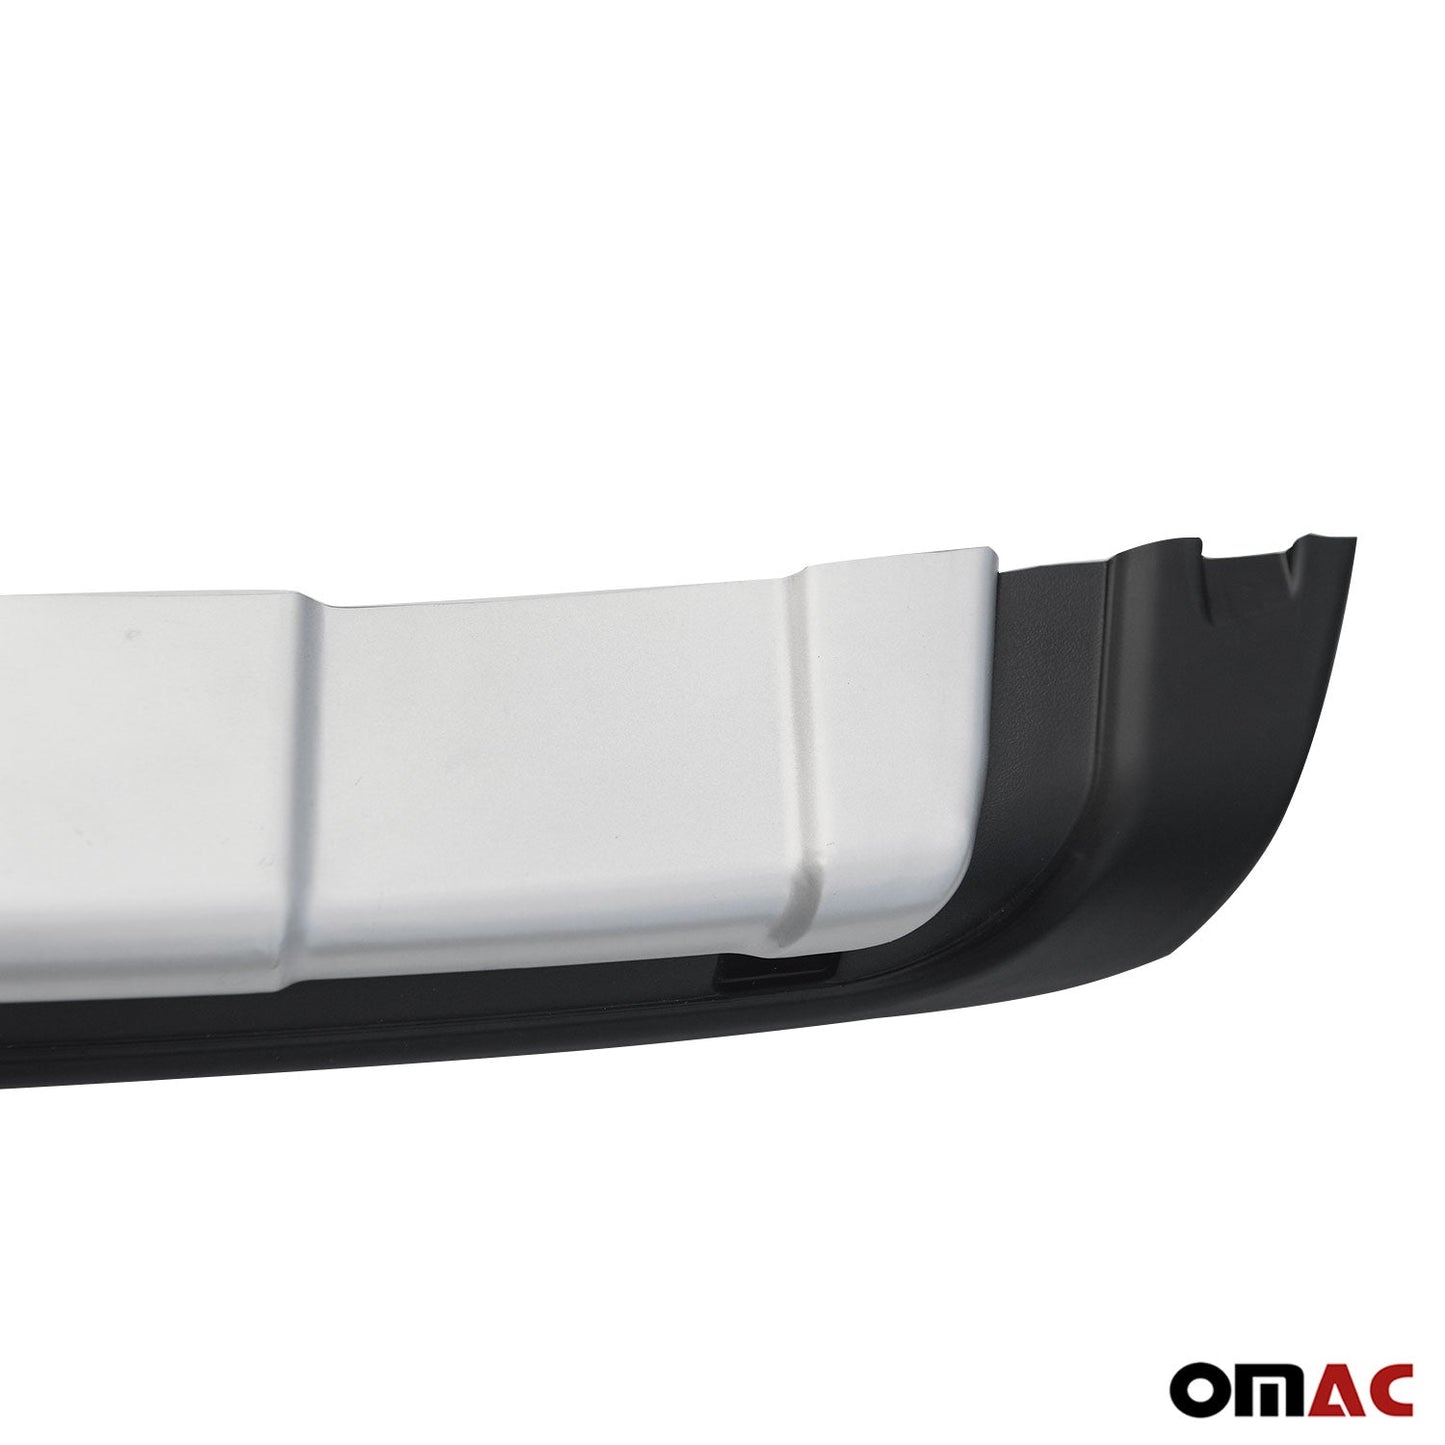 OMAC Front Rear Bumper Diffuser Body Kit for Hyundai Tucson 2010-2015 2 Pcs 3208XD006